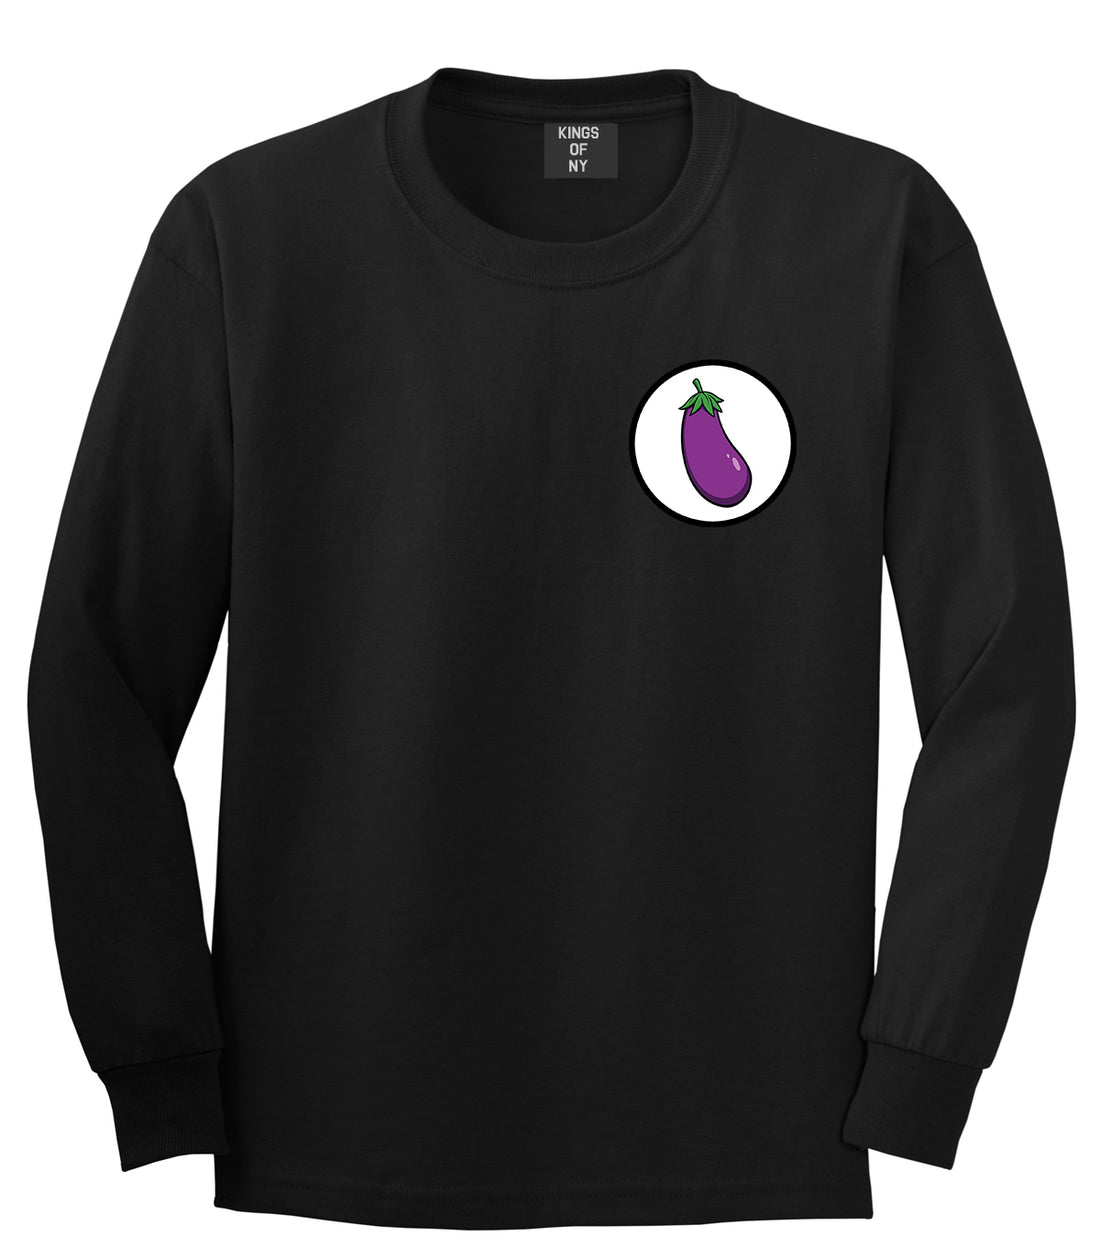 Eggplant Emoji Chest Mens Black Long Sleeve T-Shirt by Kings Of NY